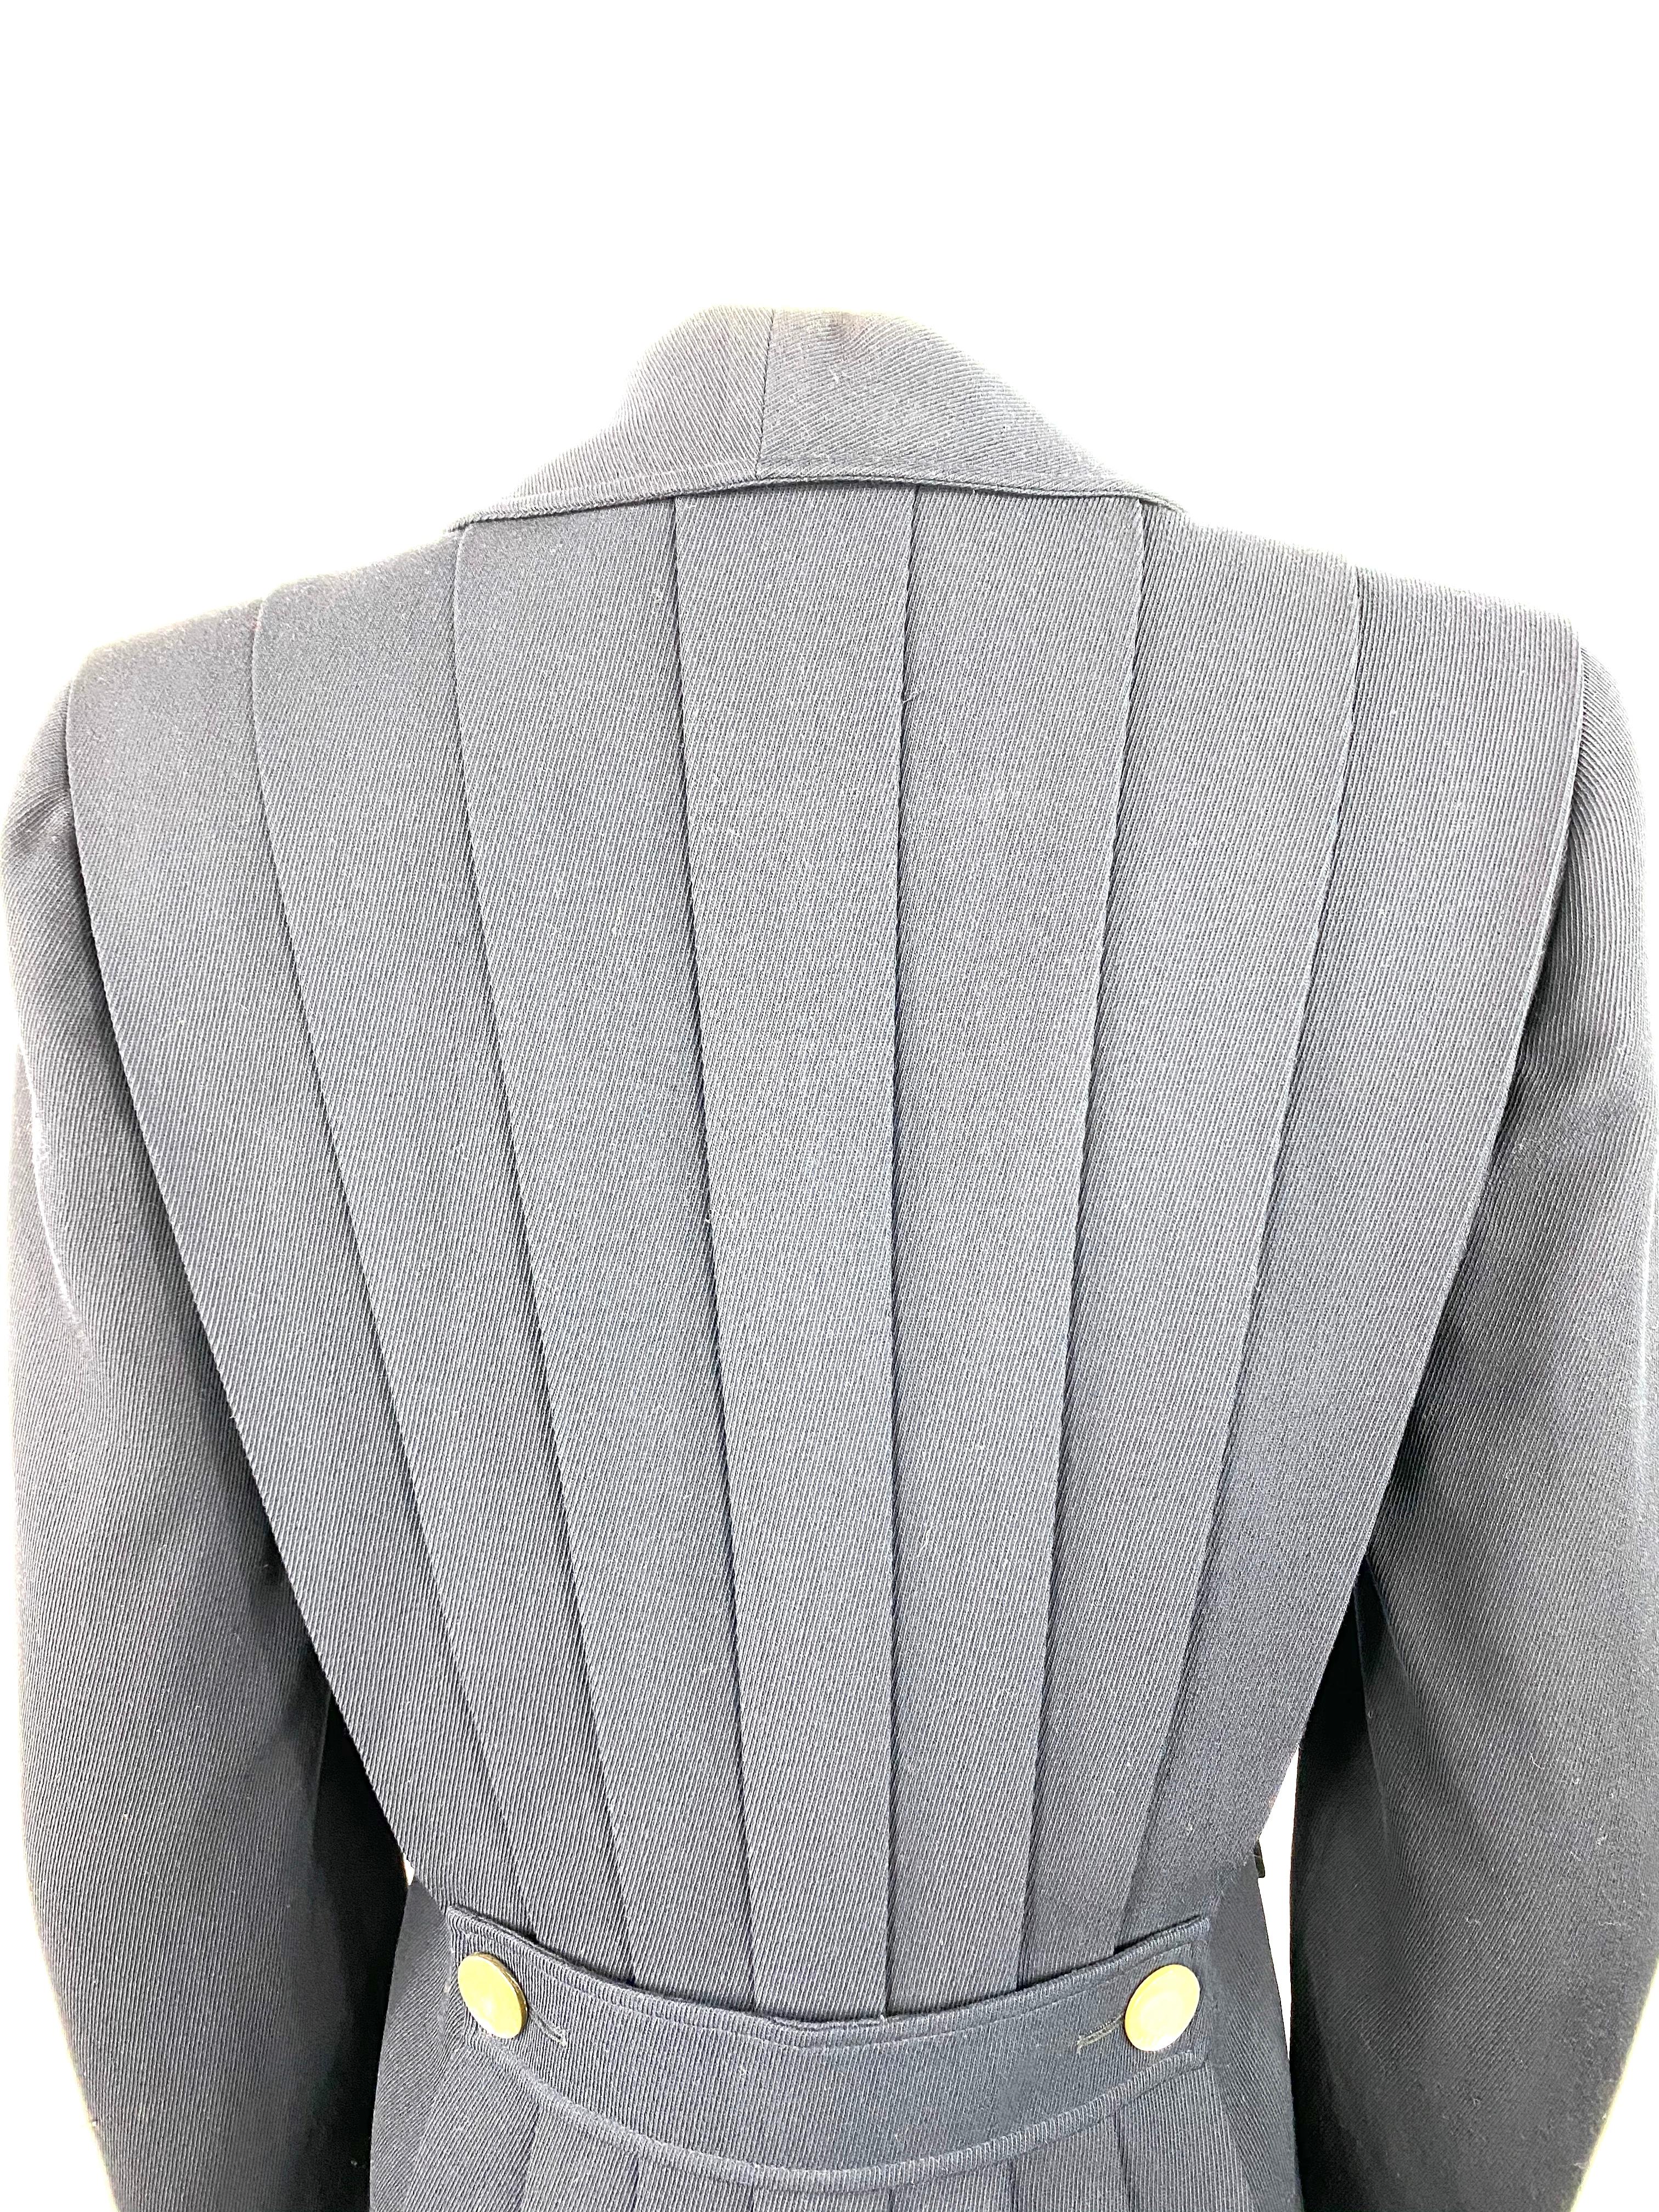 Valentino Boutique Navy Blazer Jacket Size 6 For Sale 7